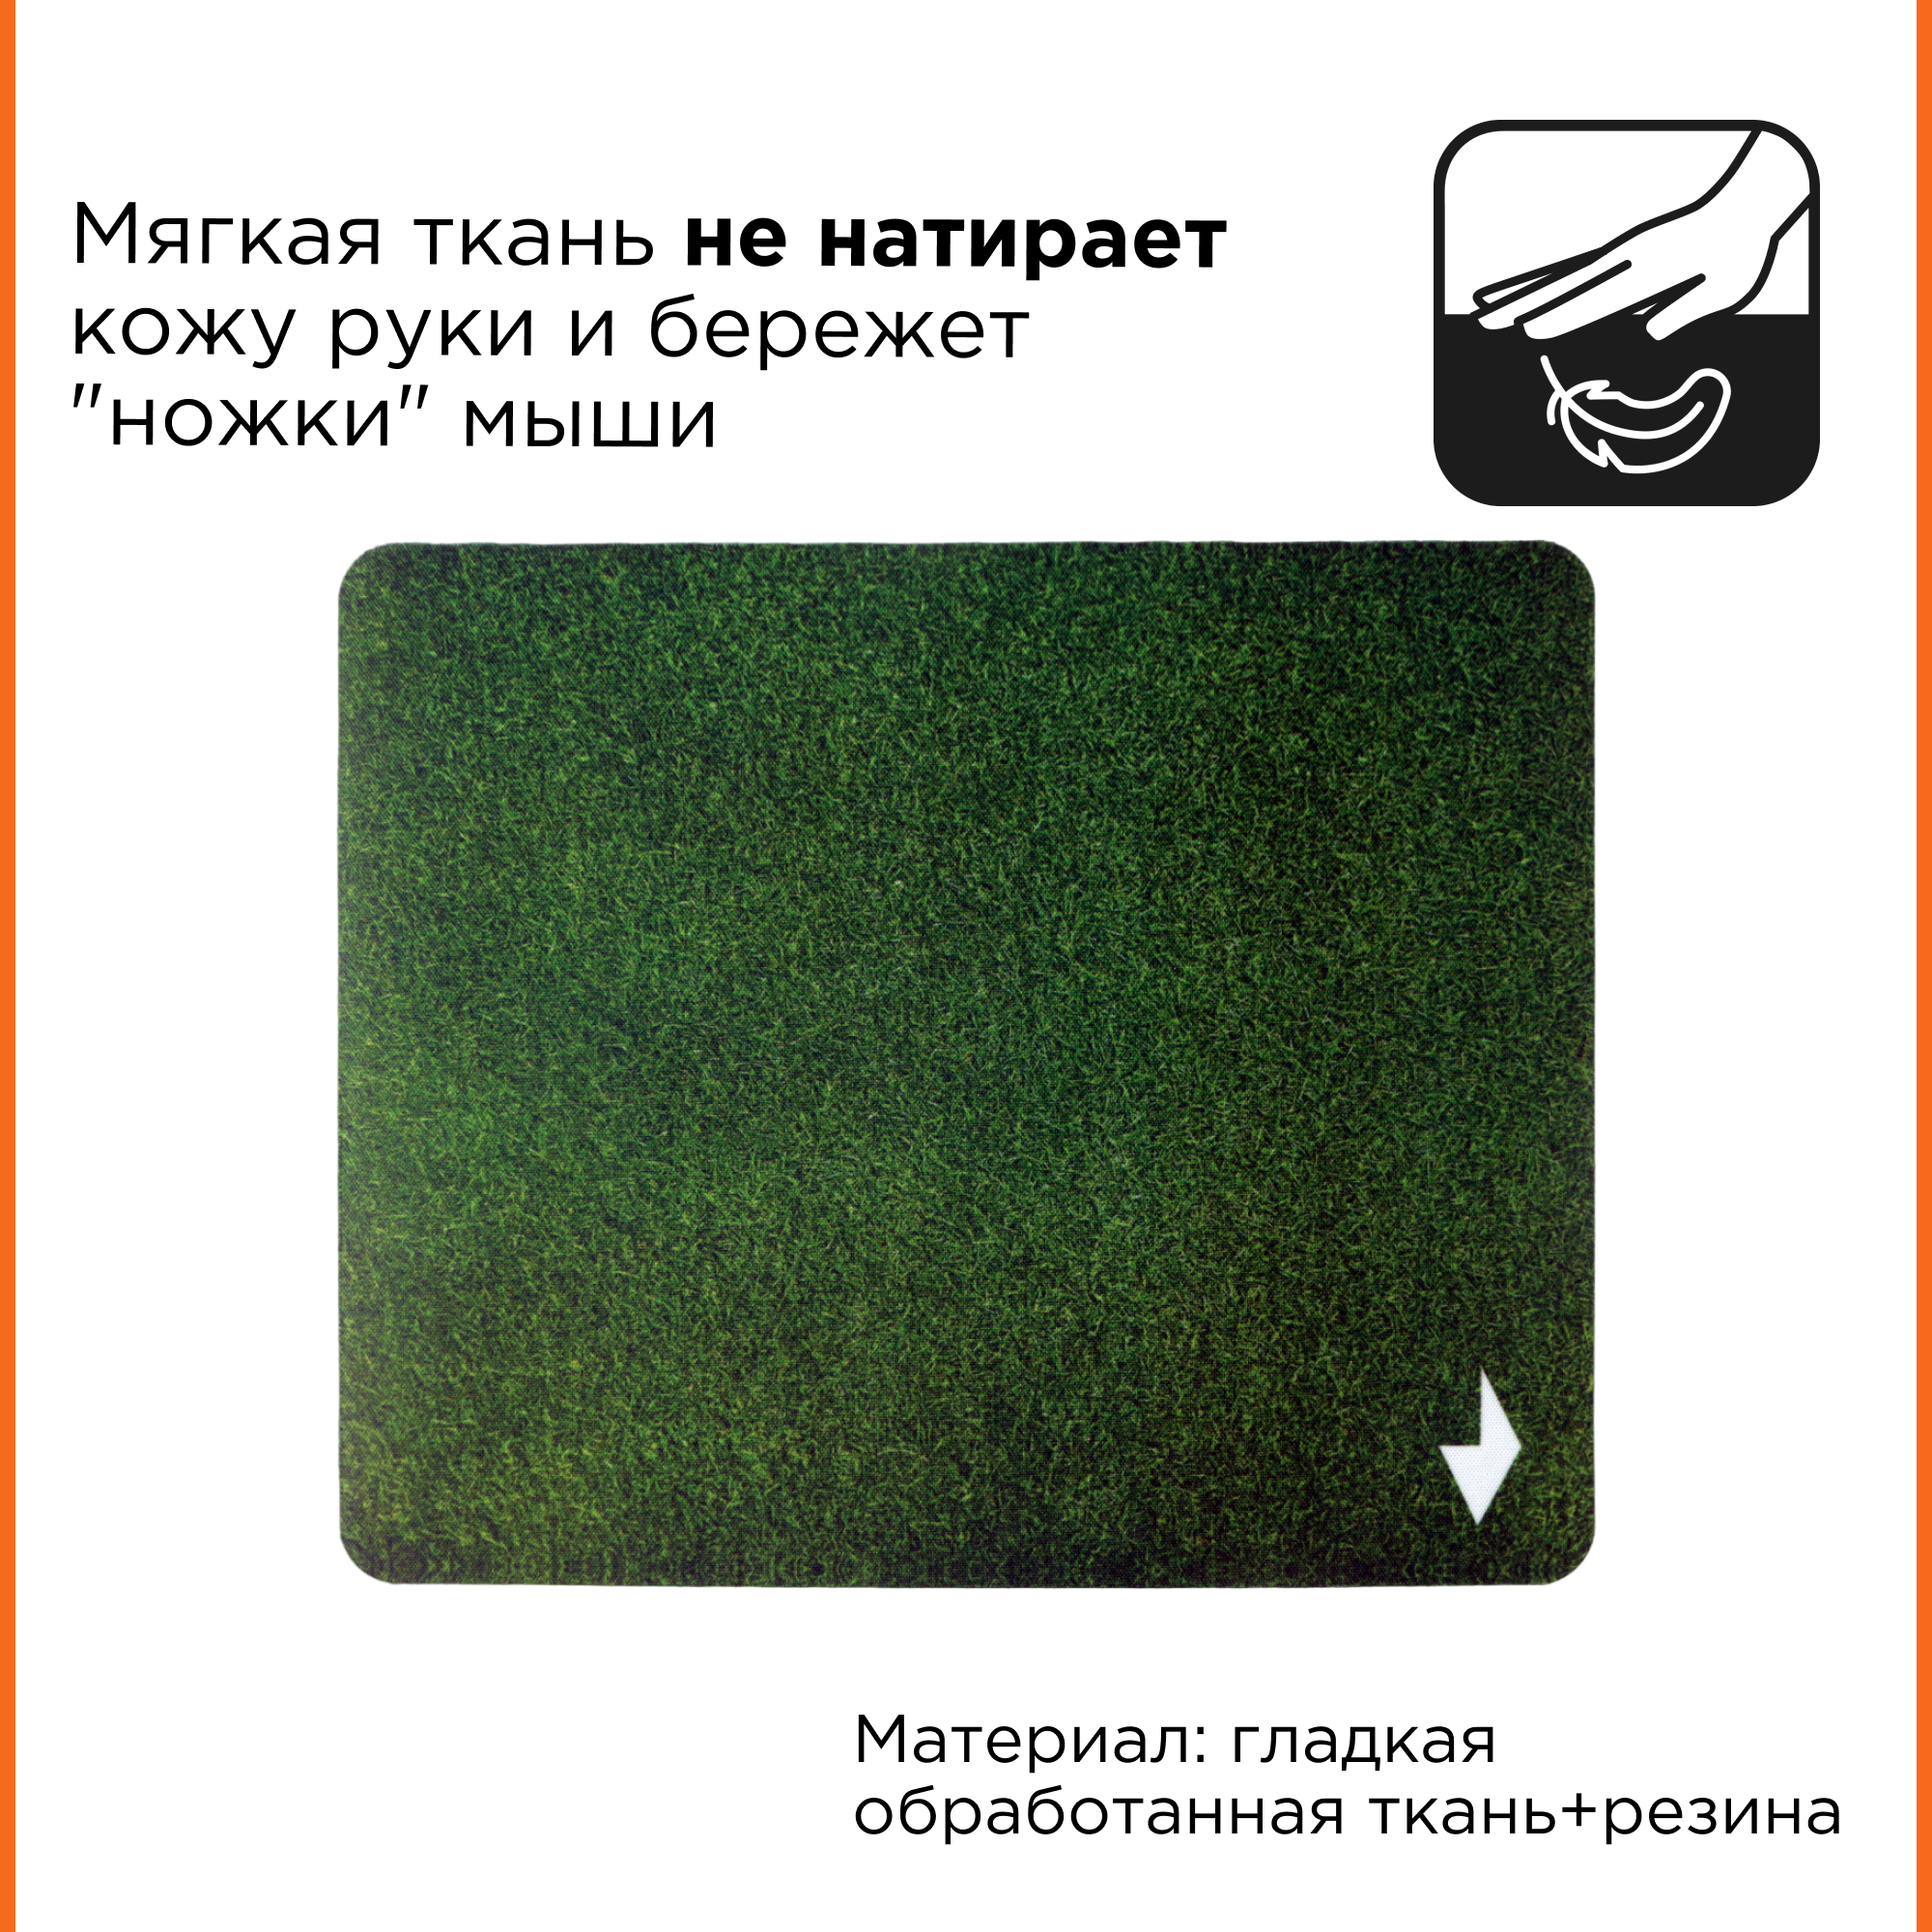 Коврик для мыши Gembird MP-GRASS, рисунок "трава", размеры 220*180*1мм, полиэстер+резина - фото №7